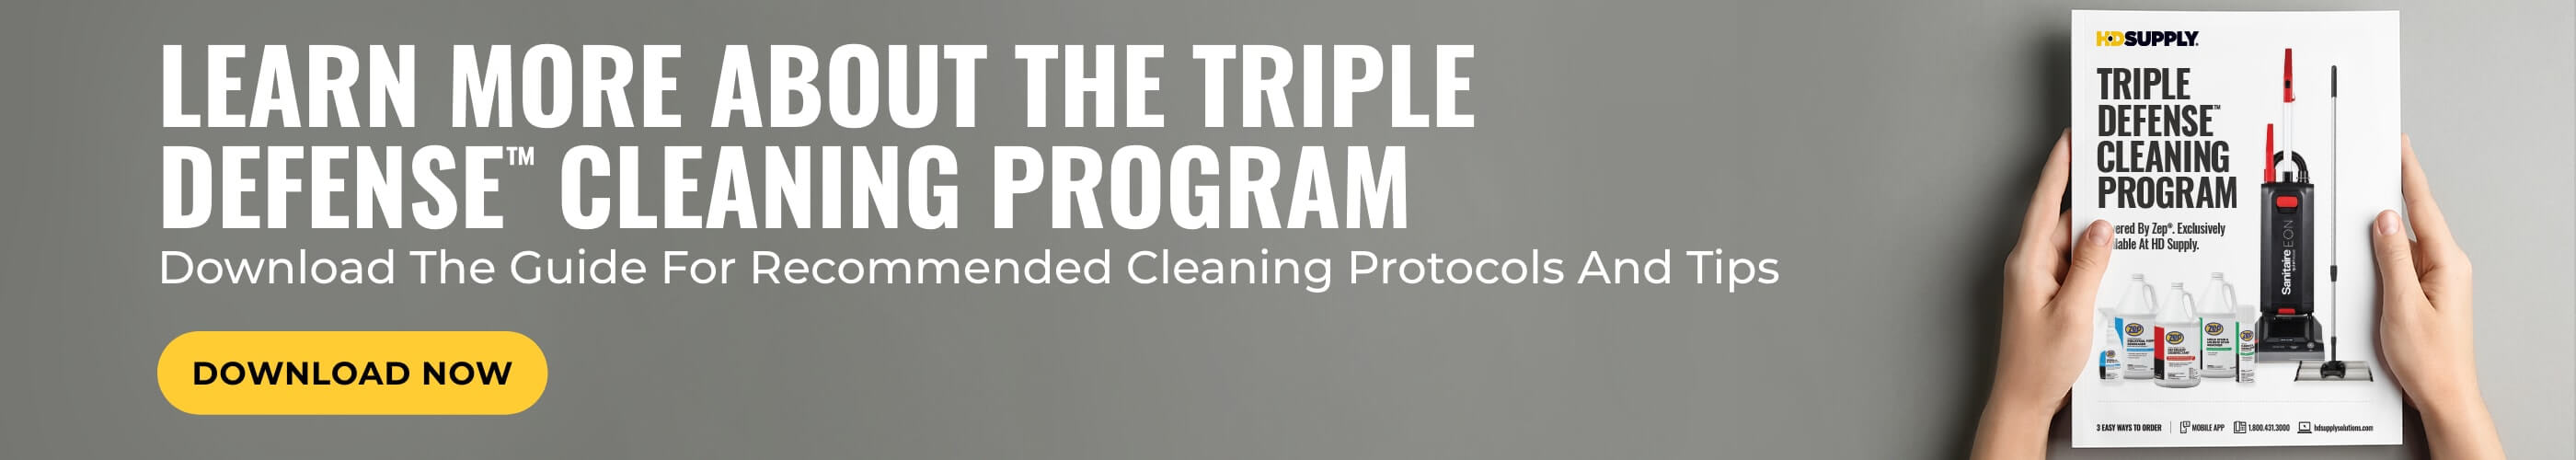 Triple Defense Cleaning Program Guide